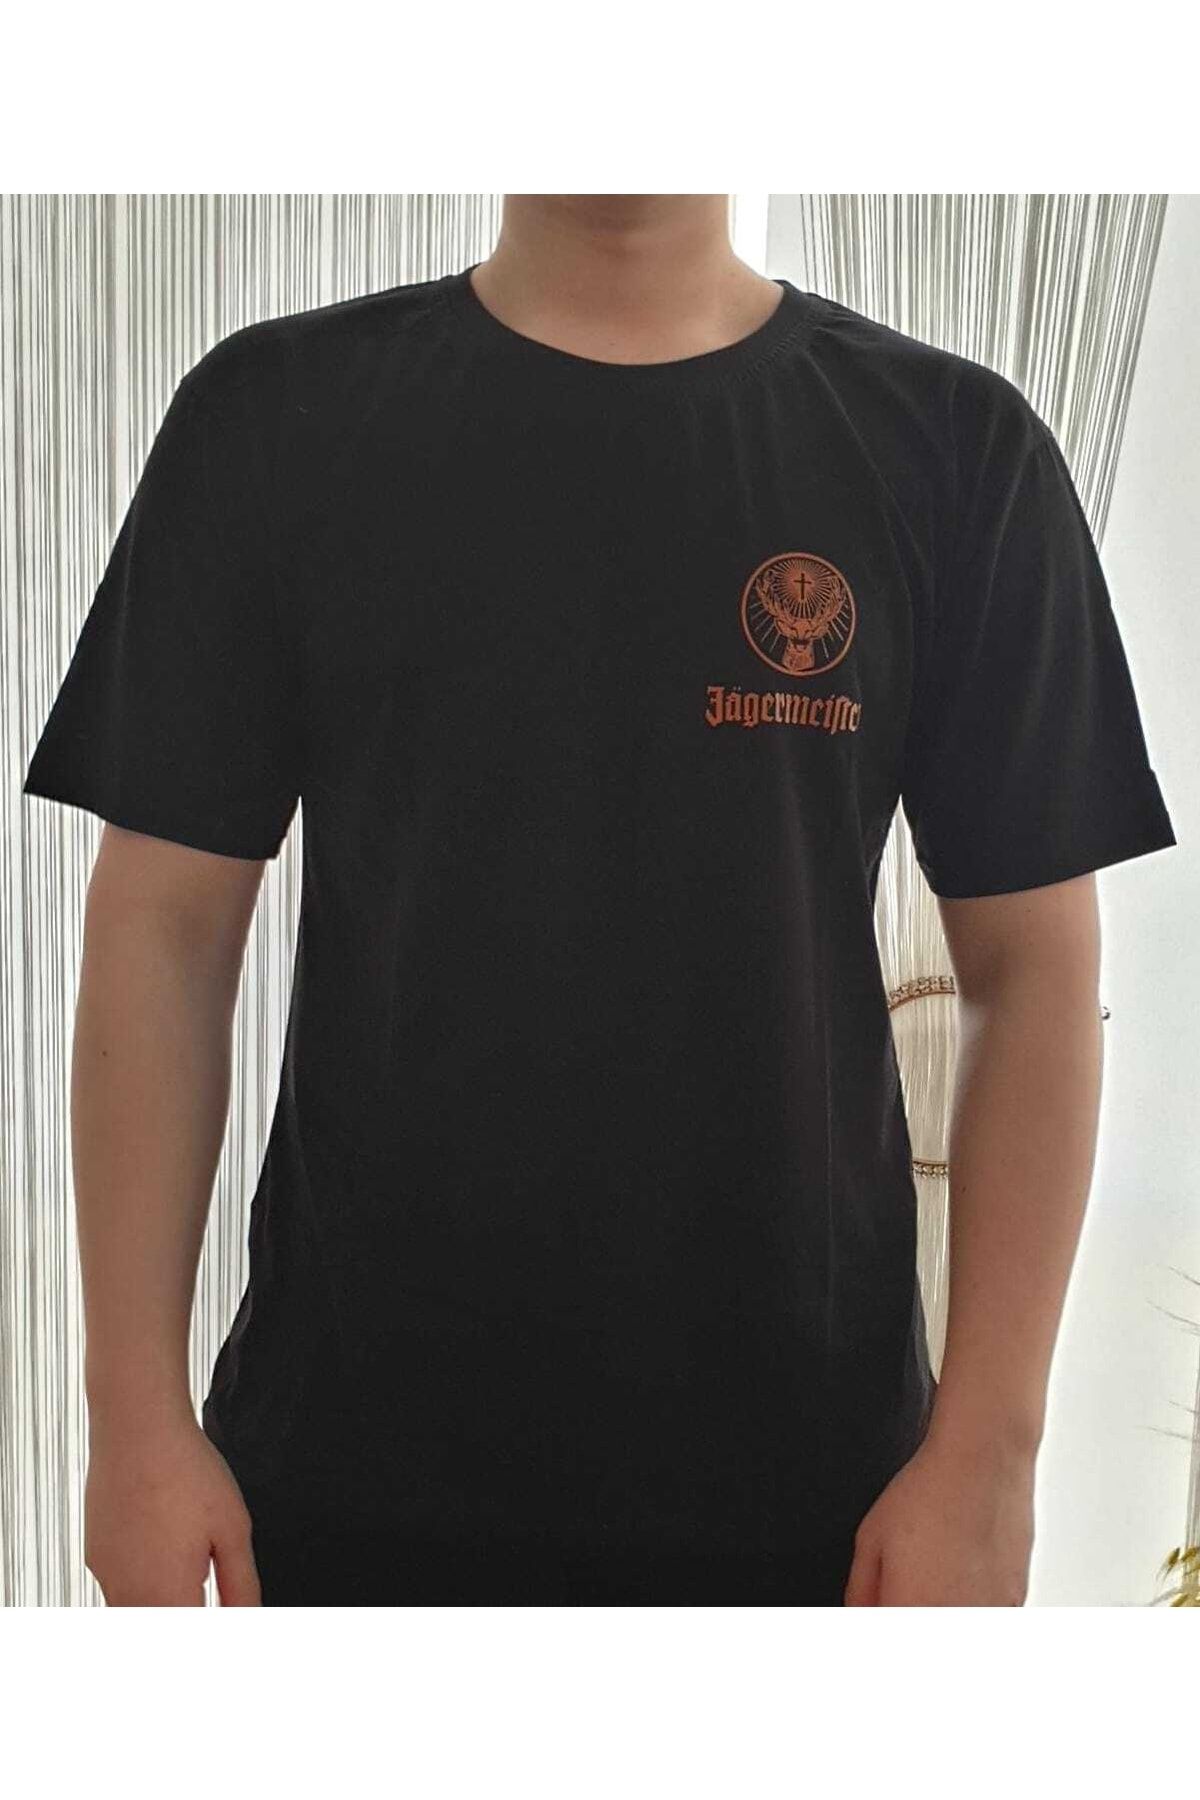 Finezza Jm Baskılı Pamuk Siyah T-shirt M Beden - 892